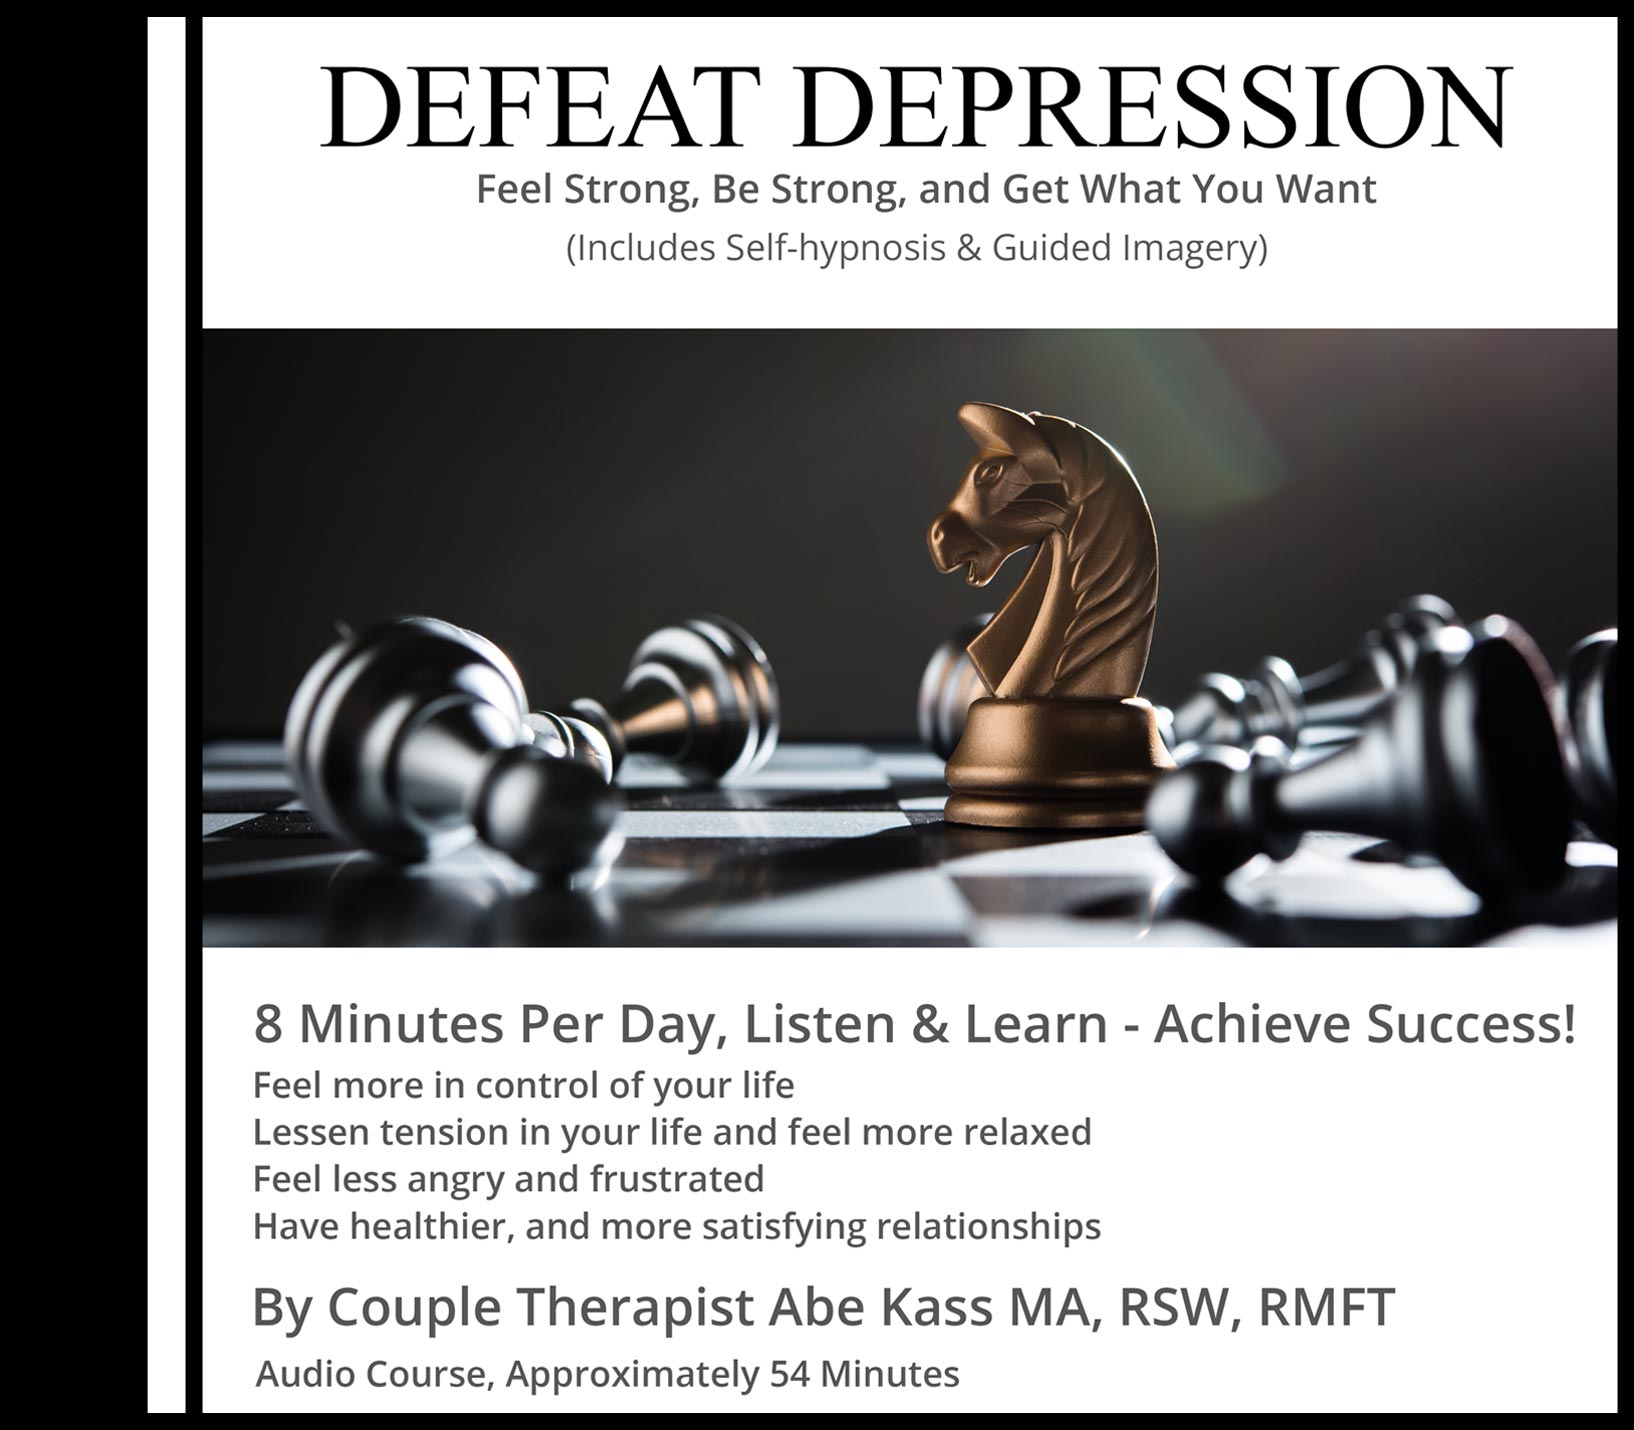 defeat depression develop a personalized anti-depression strategy